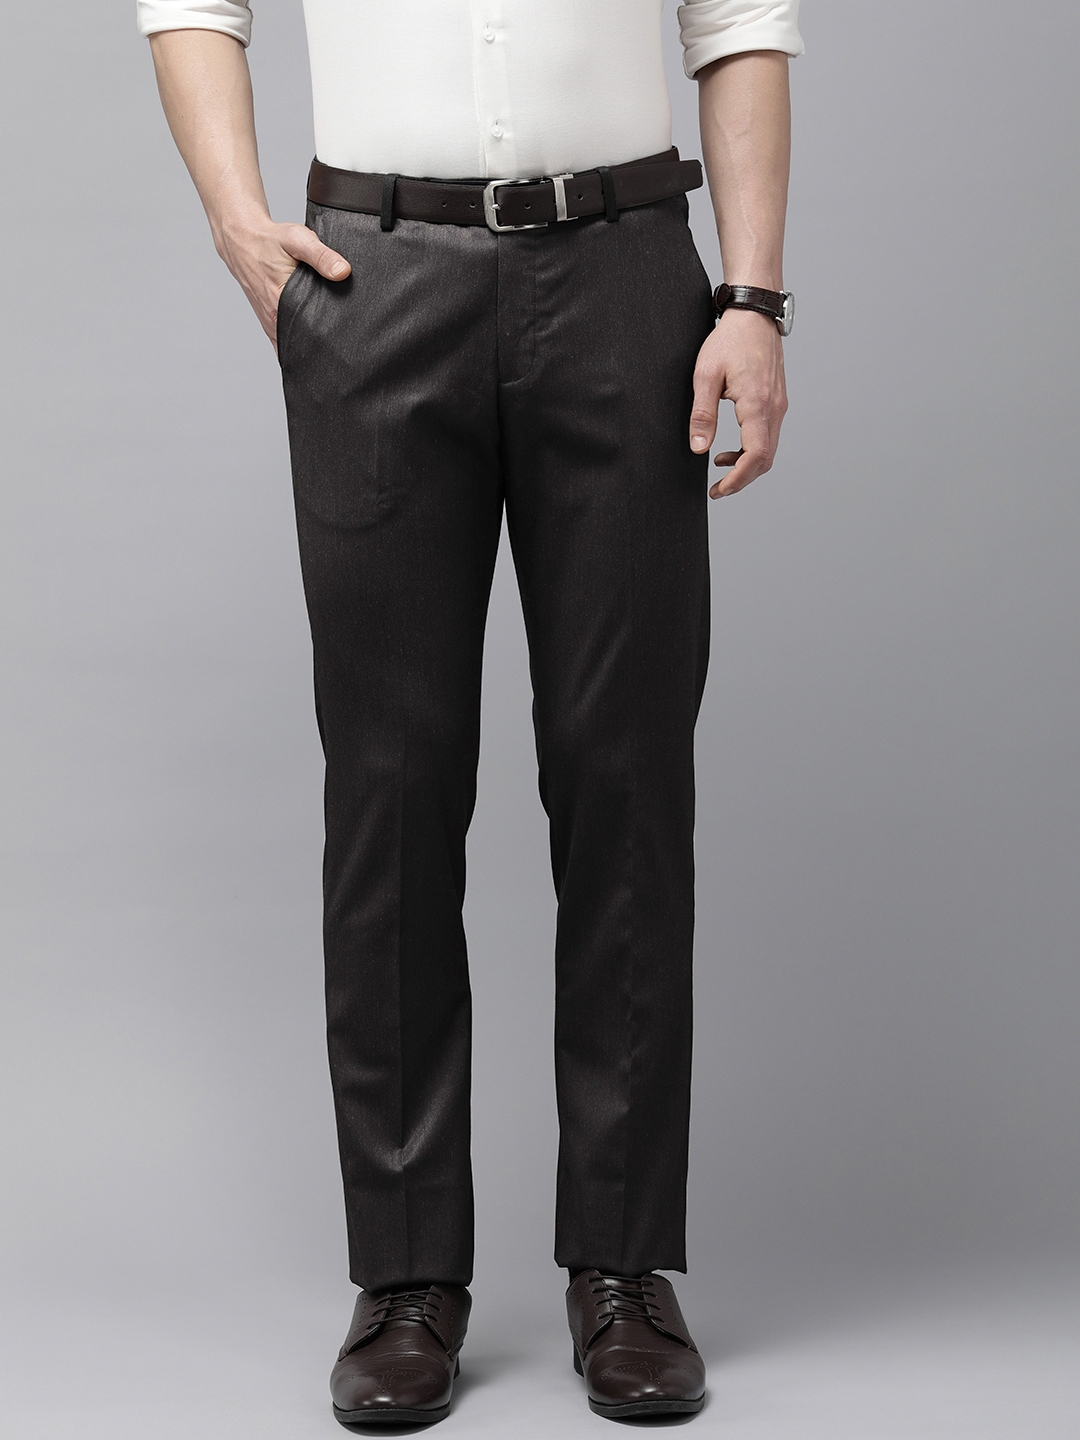 Buy Arrow Men Tailored Trousers - Trousers for Men 21170810 | Myntra